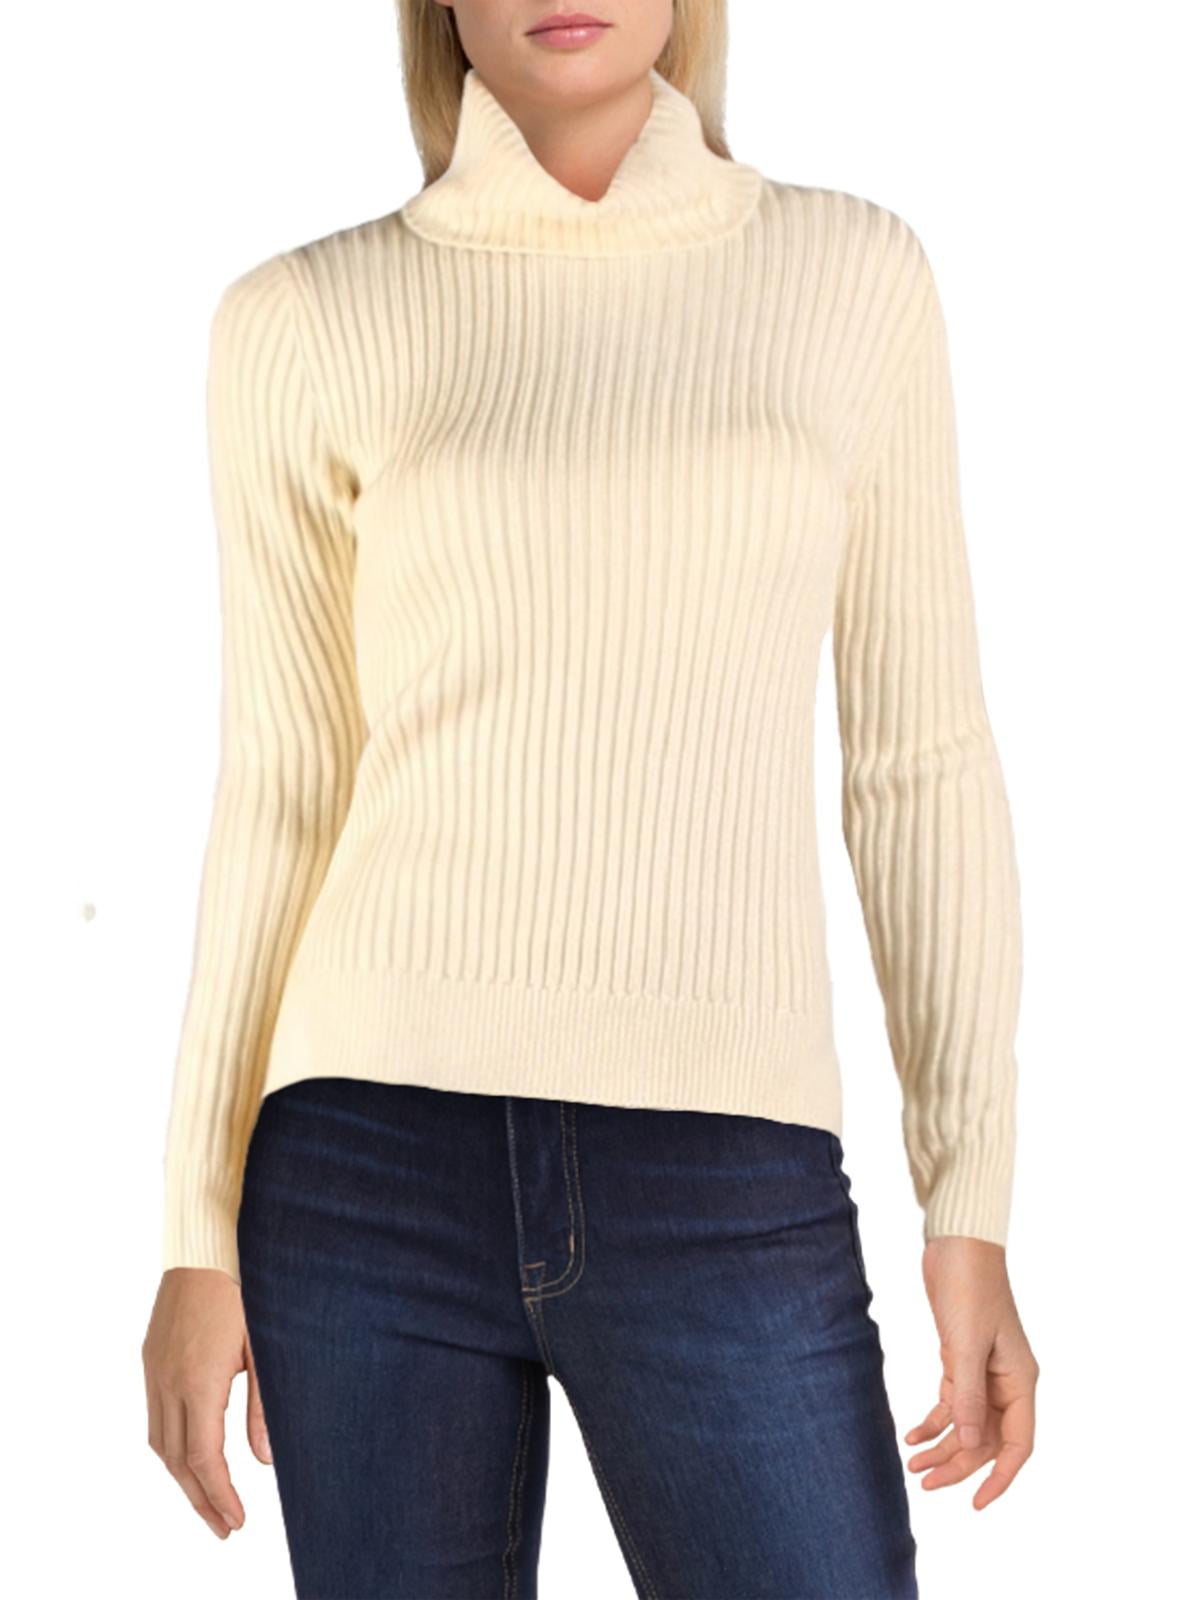 Donna Karan Womens Wool Blend Ribbed Knit Mock Turtleneck Sweater Top BHFO 1143 